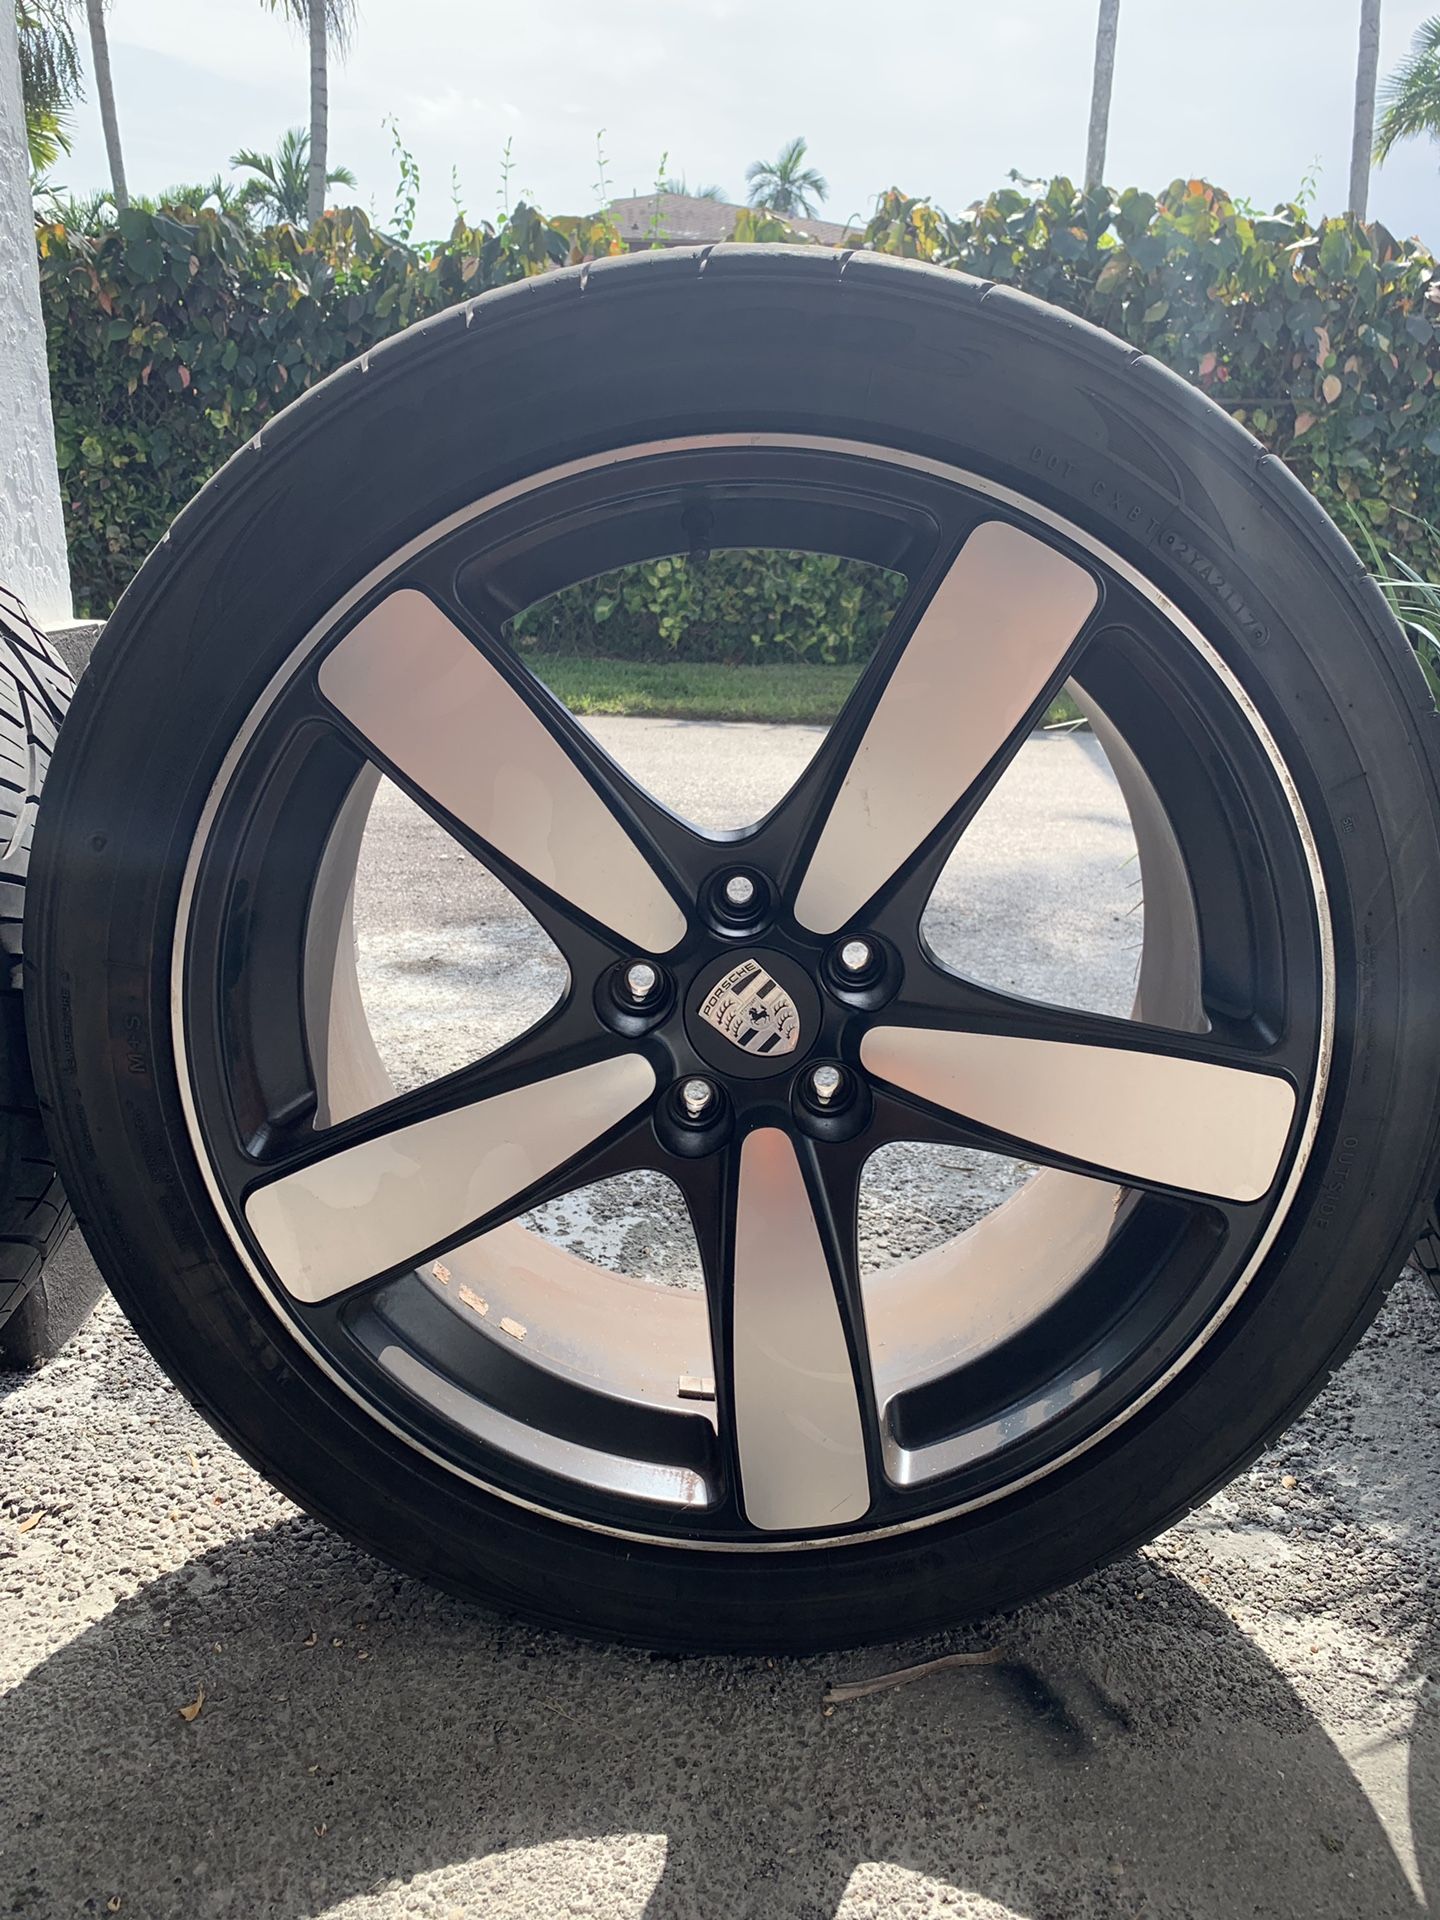 22” Porsche Wheel with Premium tires- send me an offer!